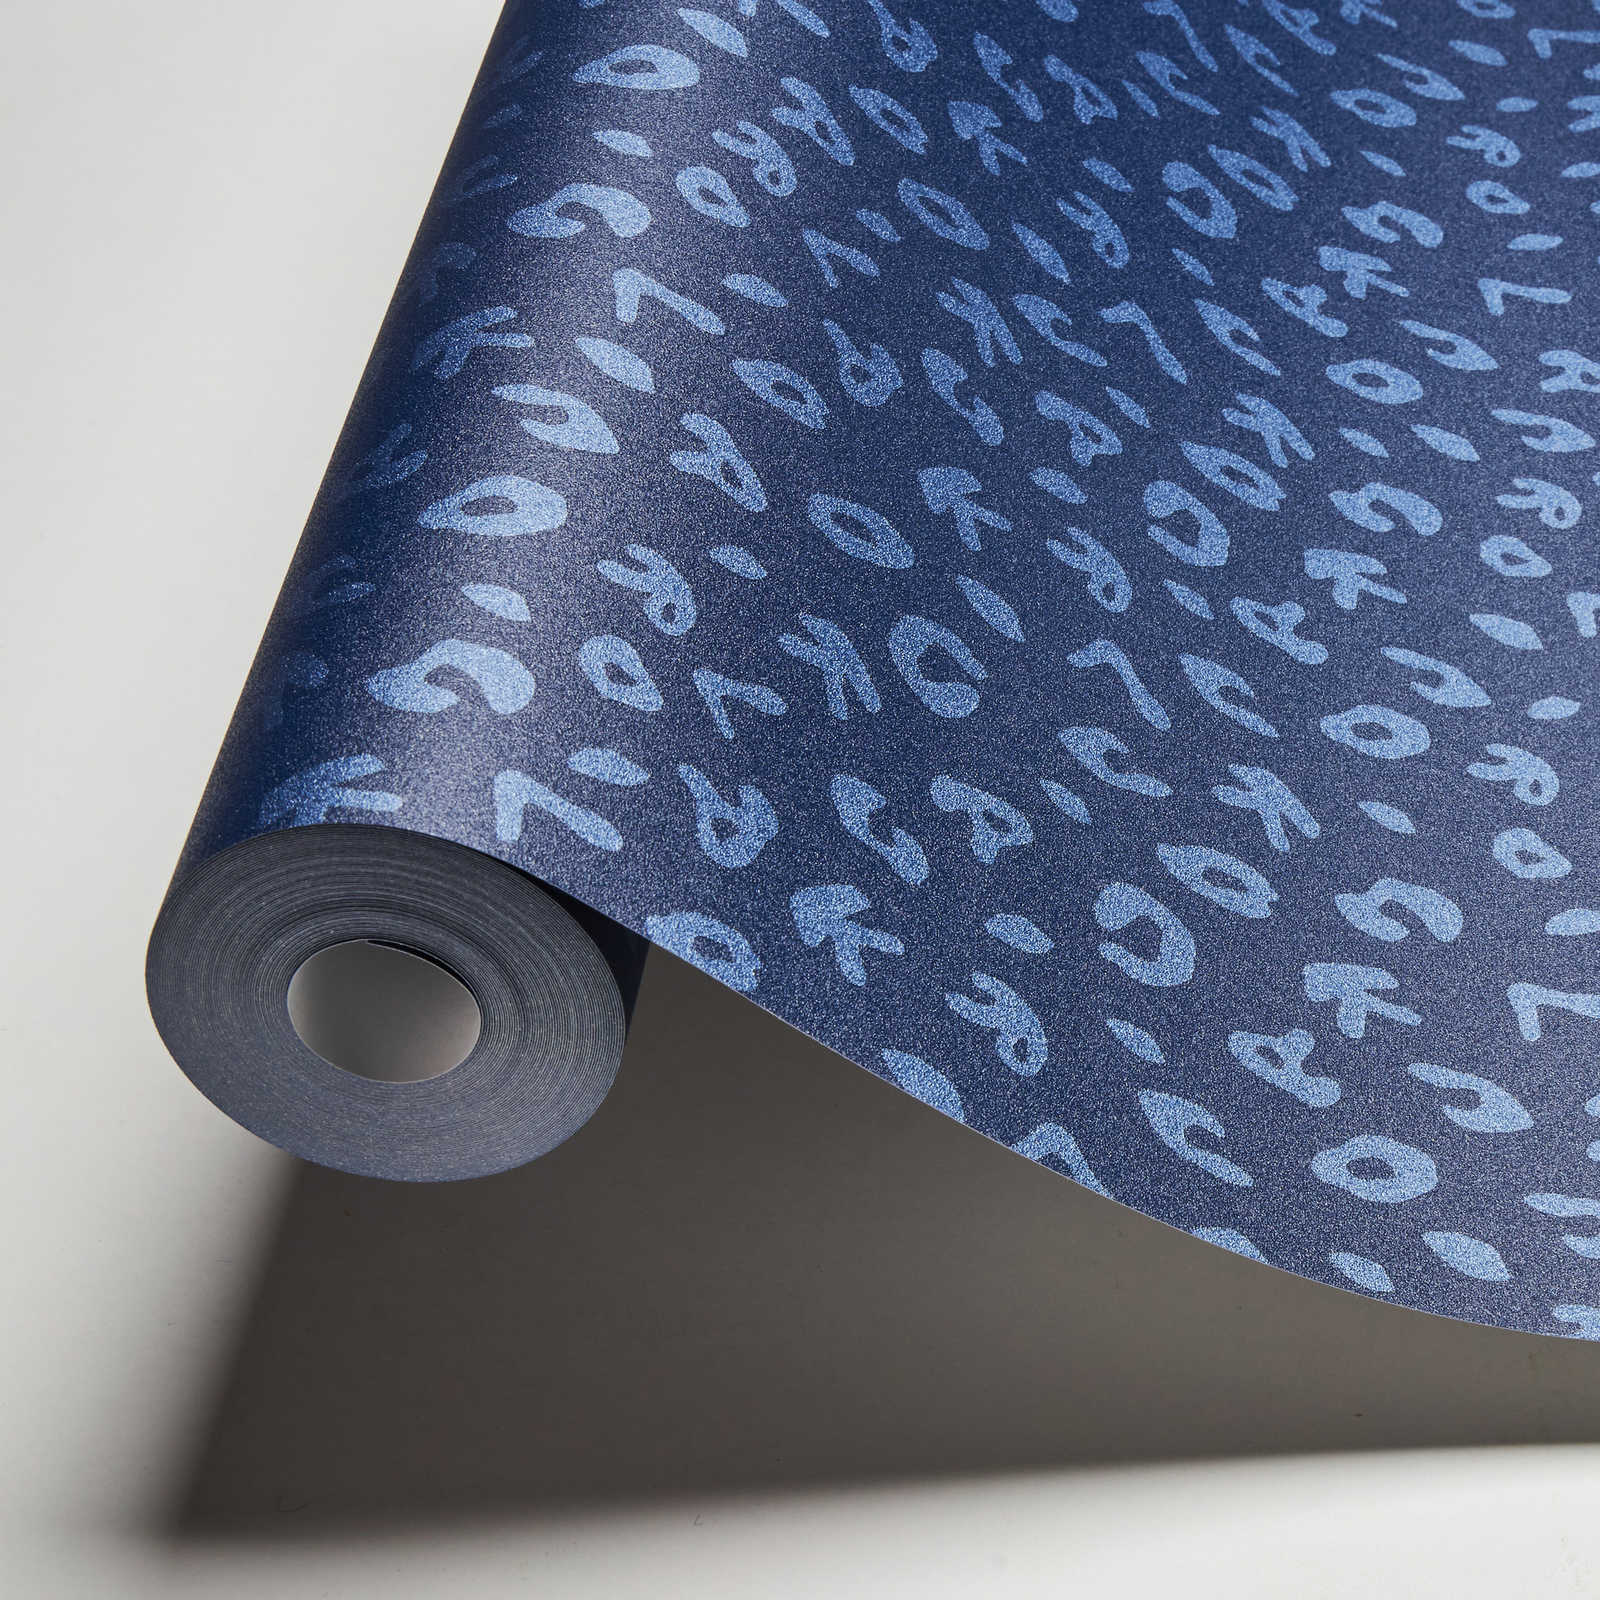             Karl LAGERFELD Tapete Animal Print – Blau, Metallic
        